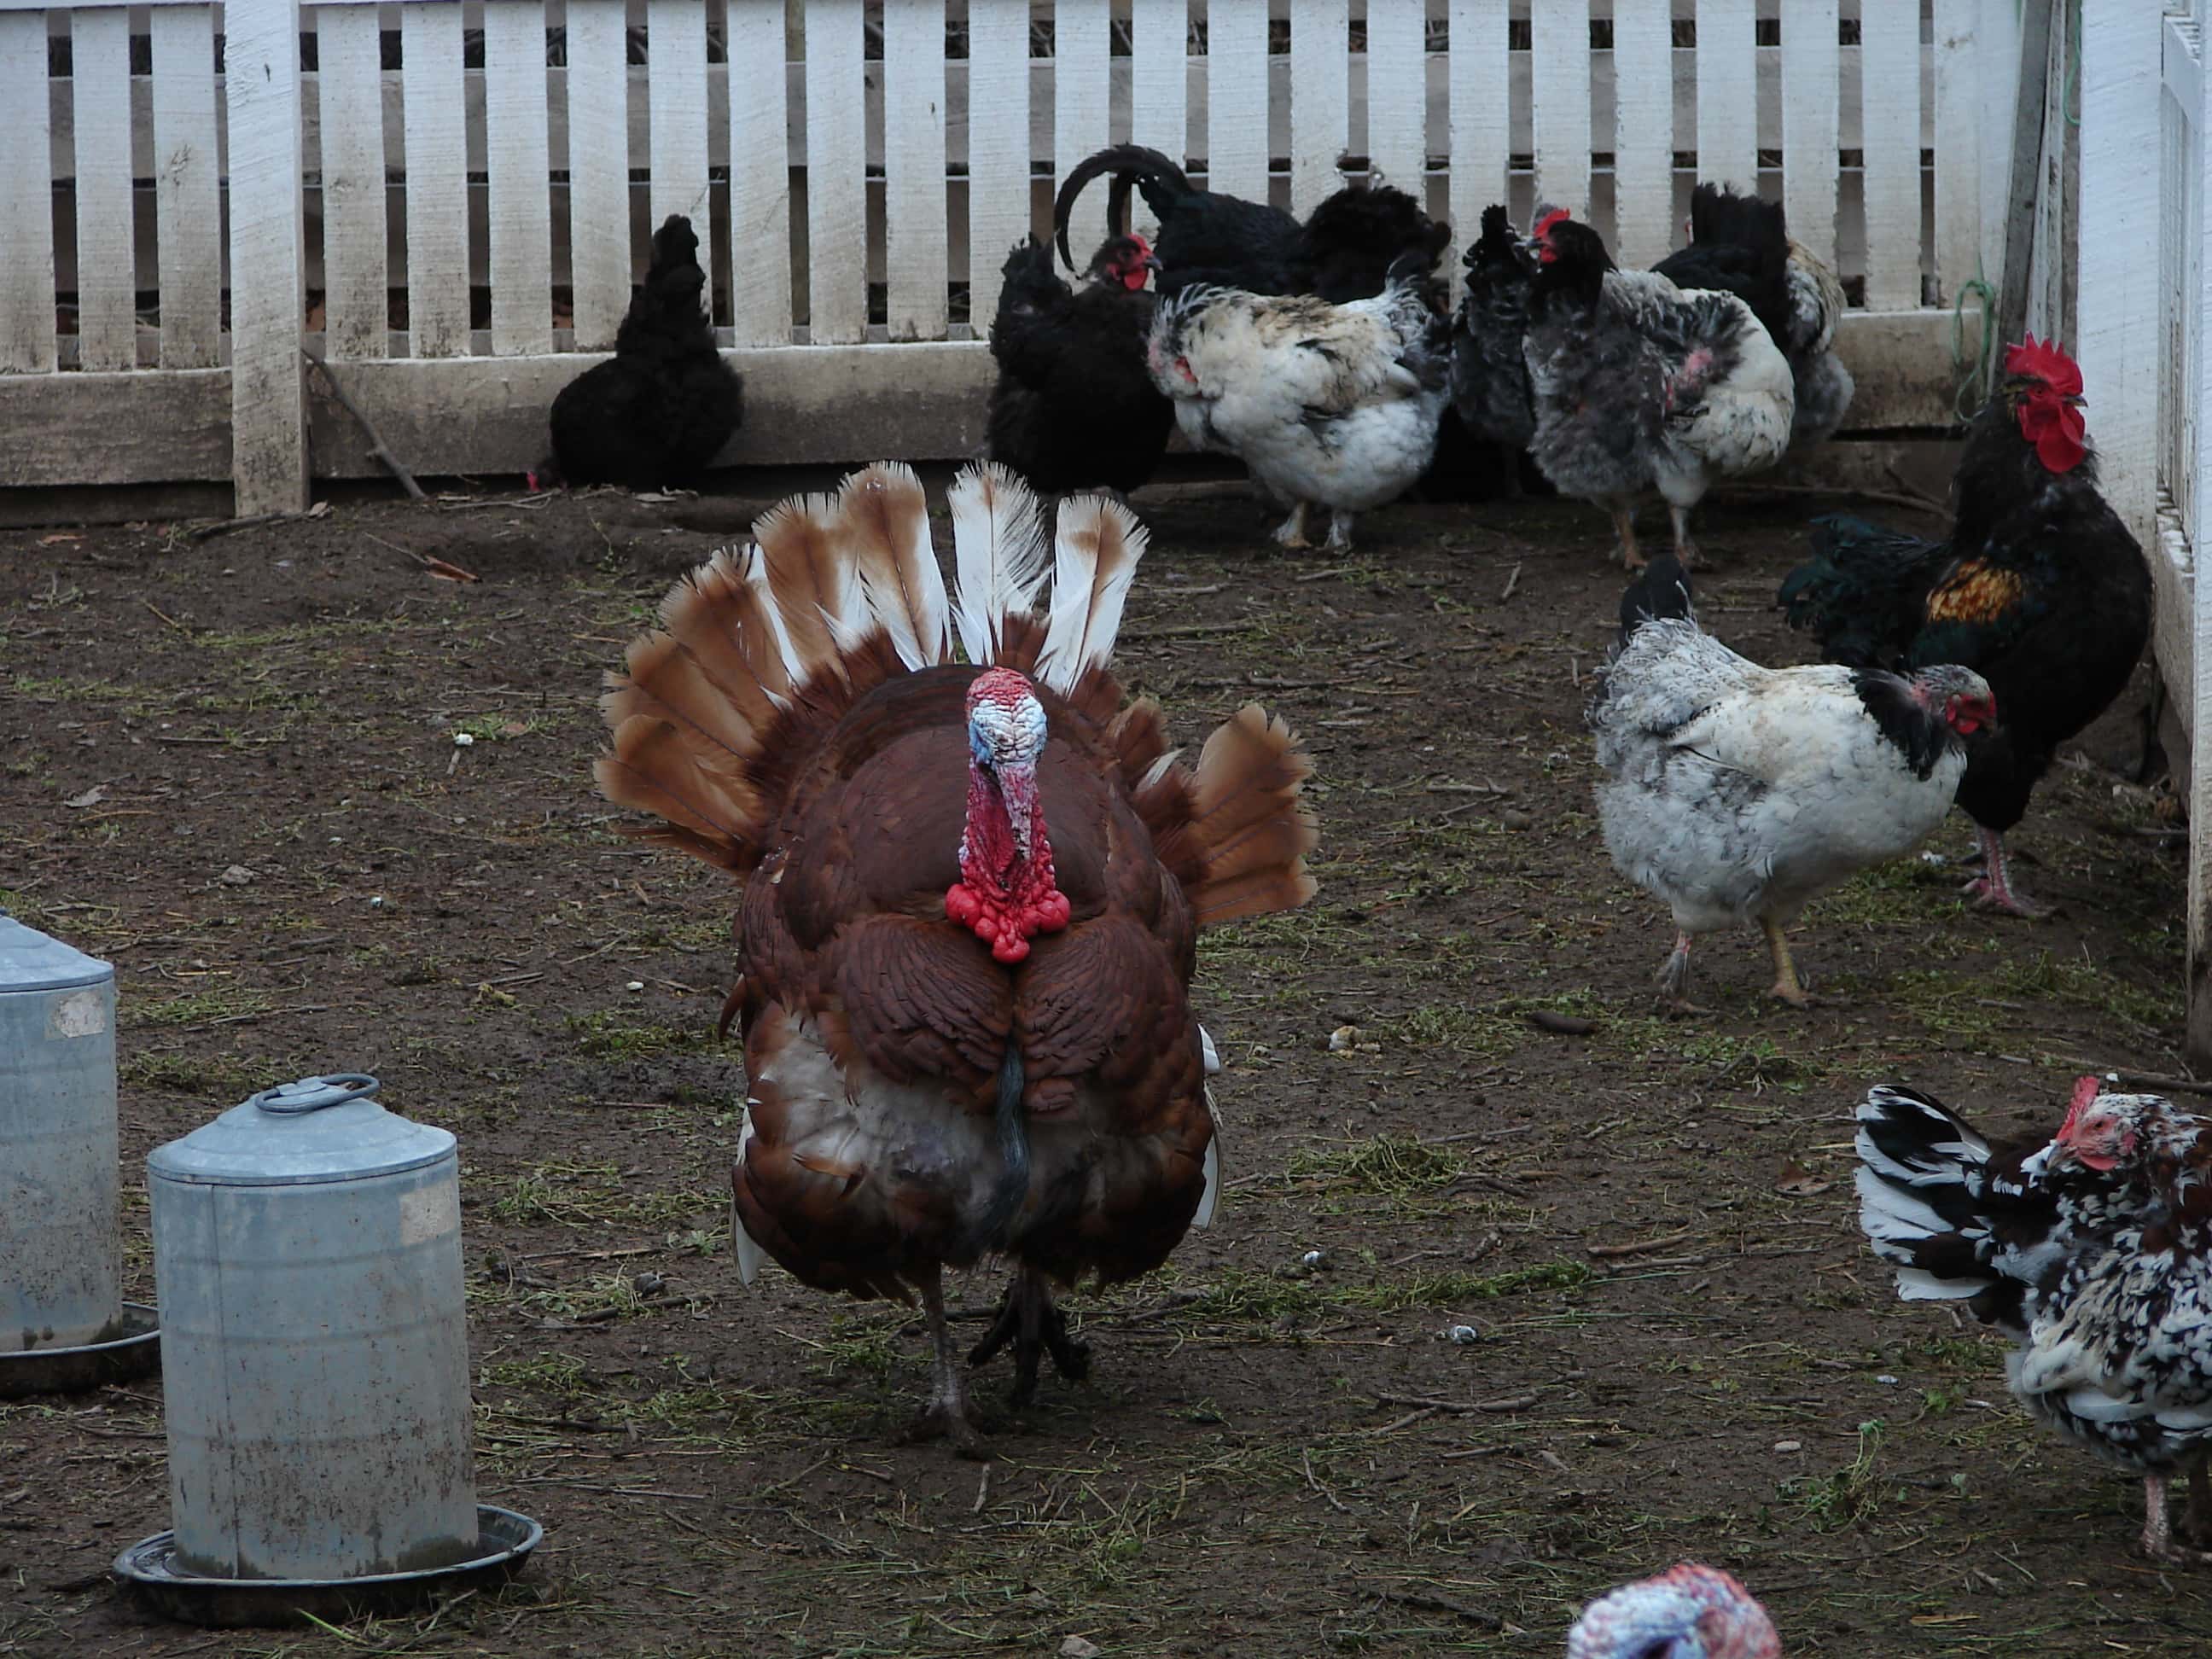 Chickens and a Turkey, Shaker Village, Harrodsburg, Kentucky